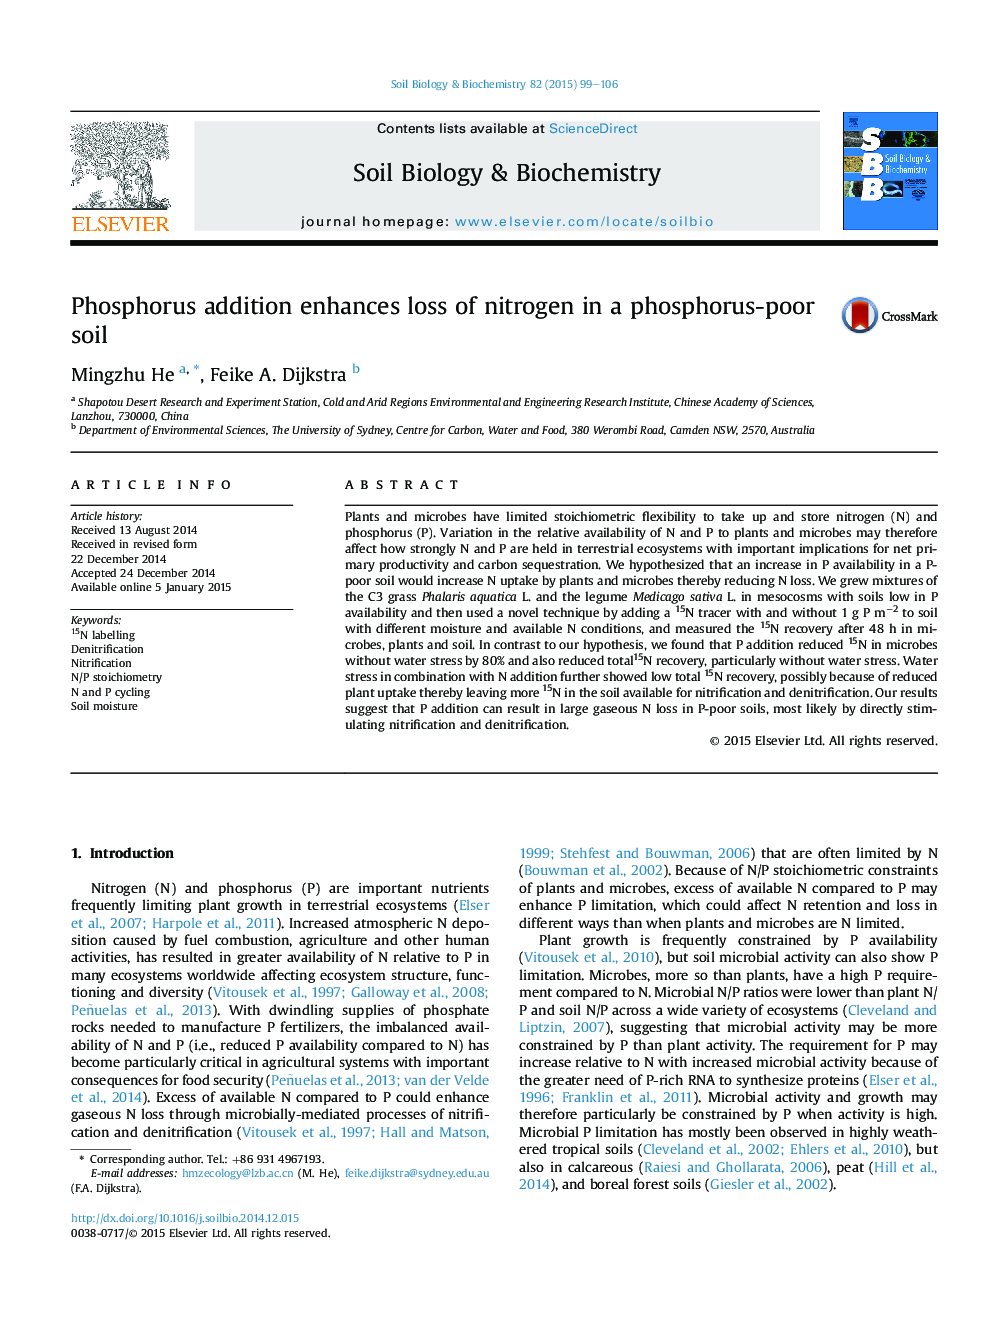 Phosphorus addition enhances loss of nitrogen in a phosphorus-poor soil